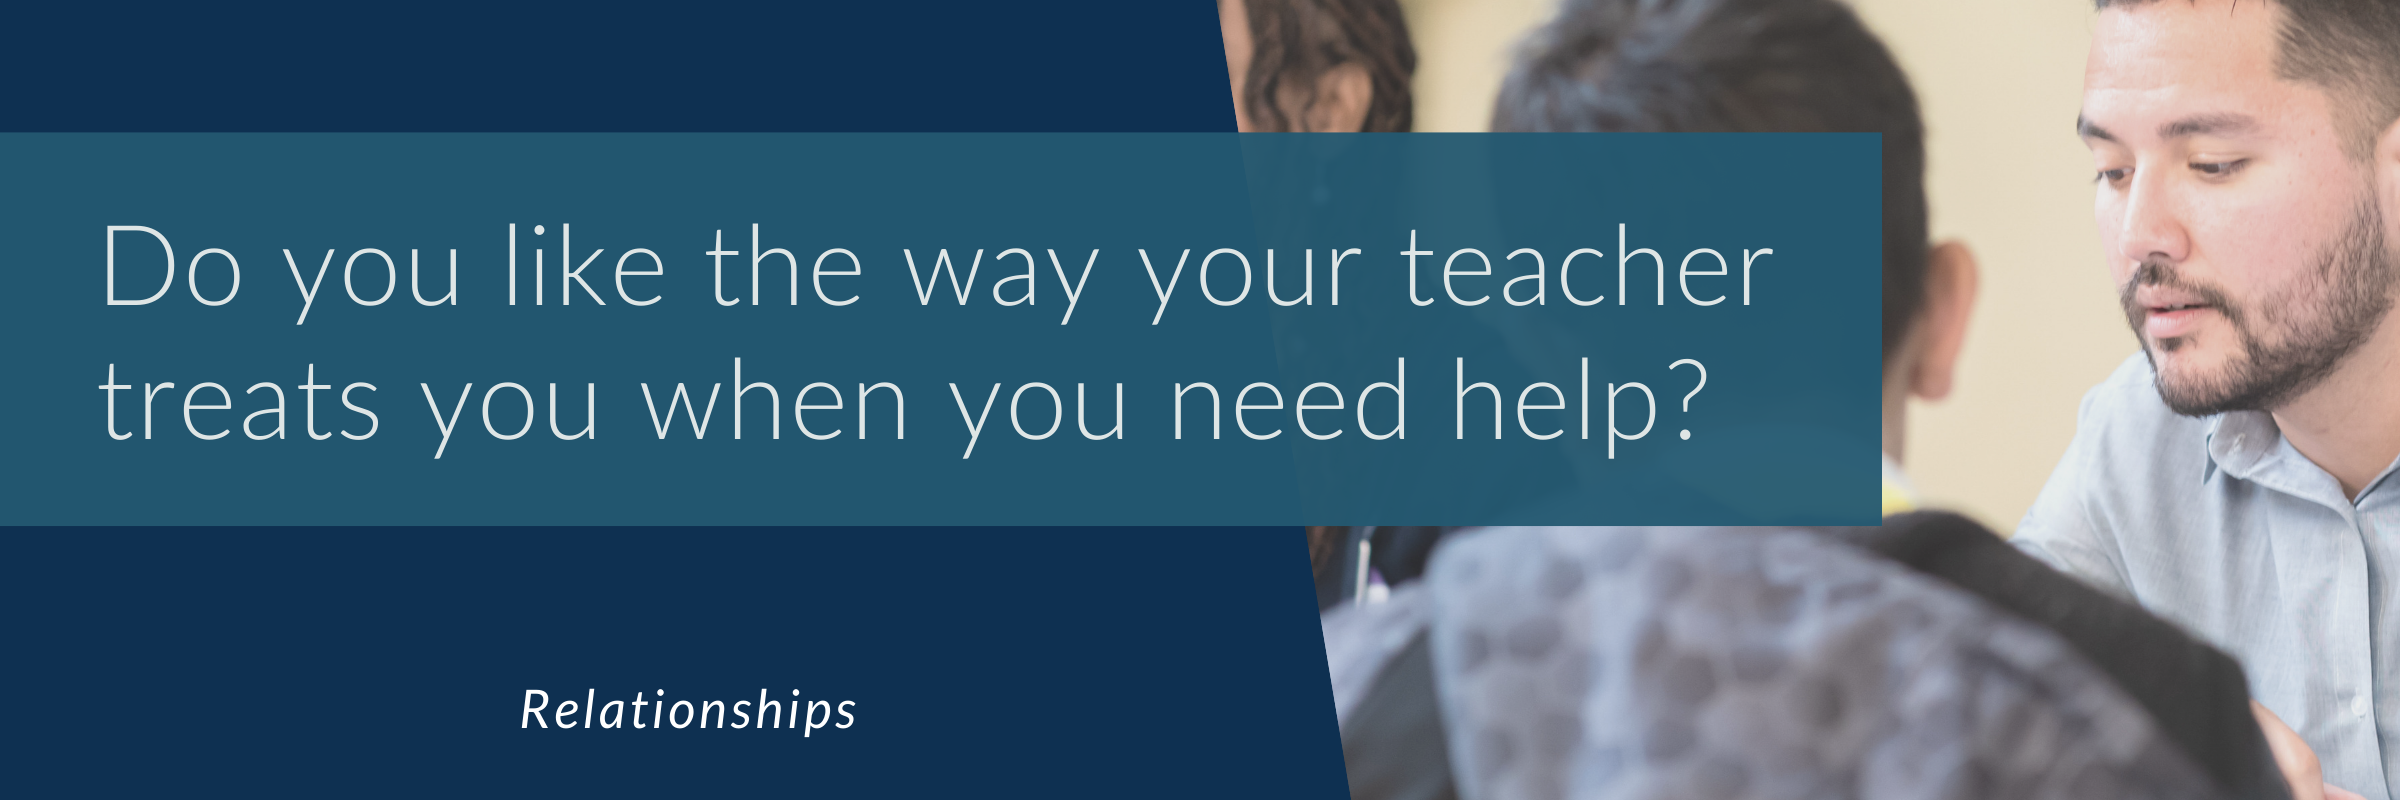 Do you like the way your teacher treats you when you need help?